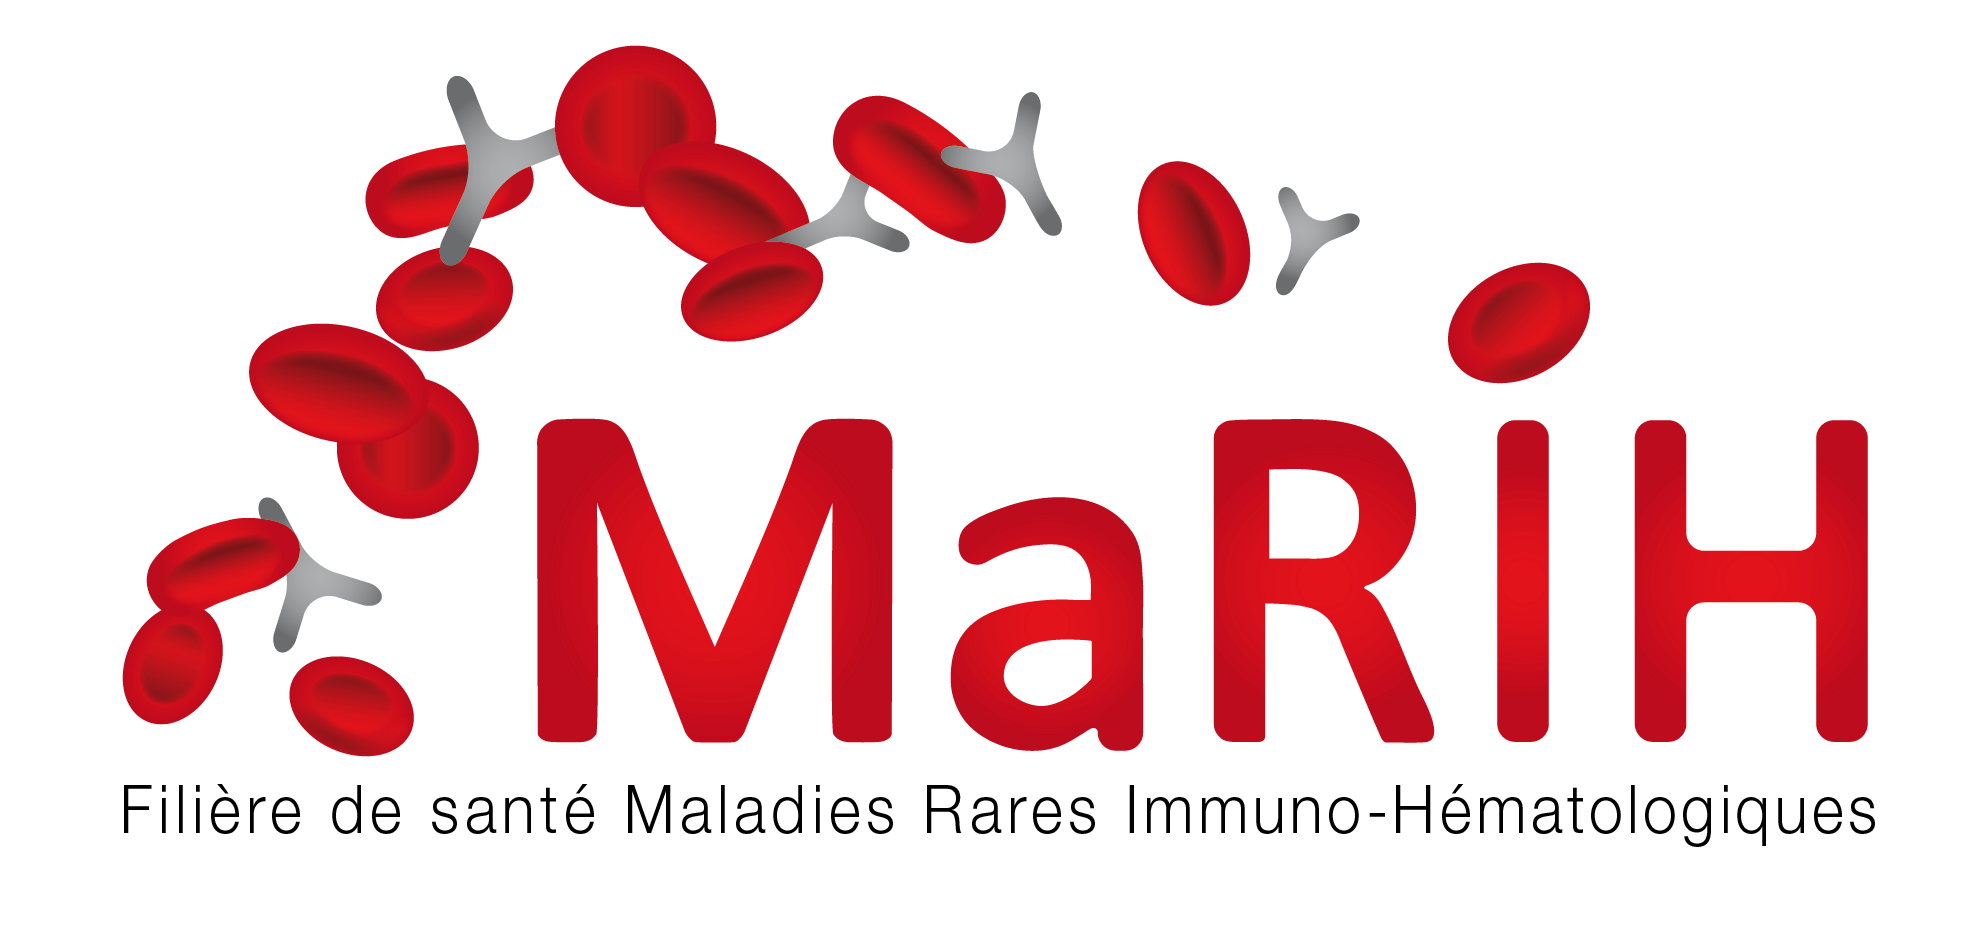 Logo MaRIH